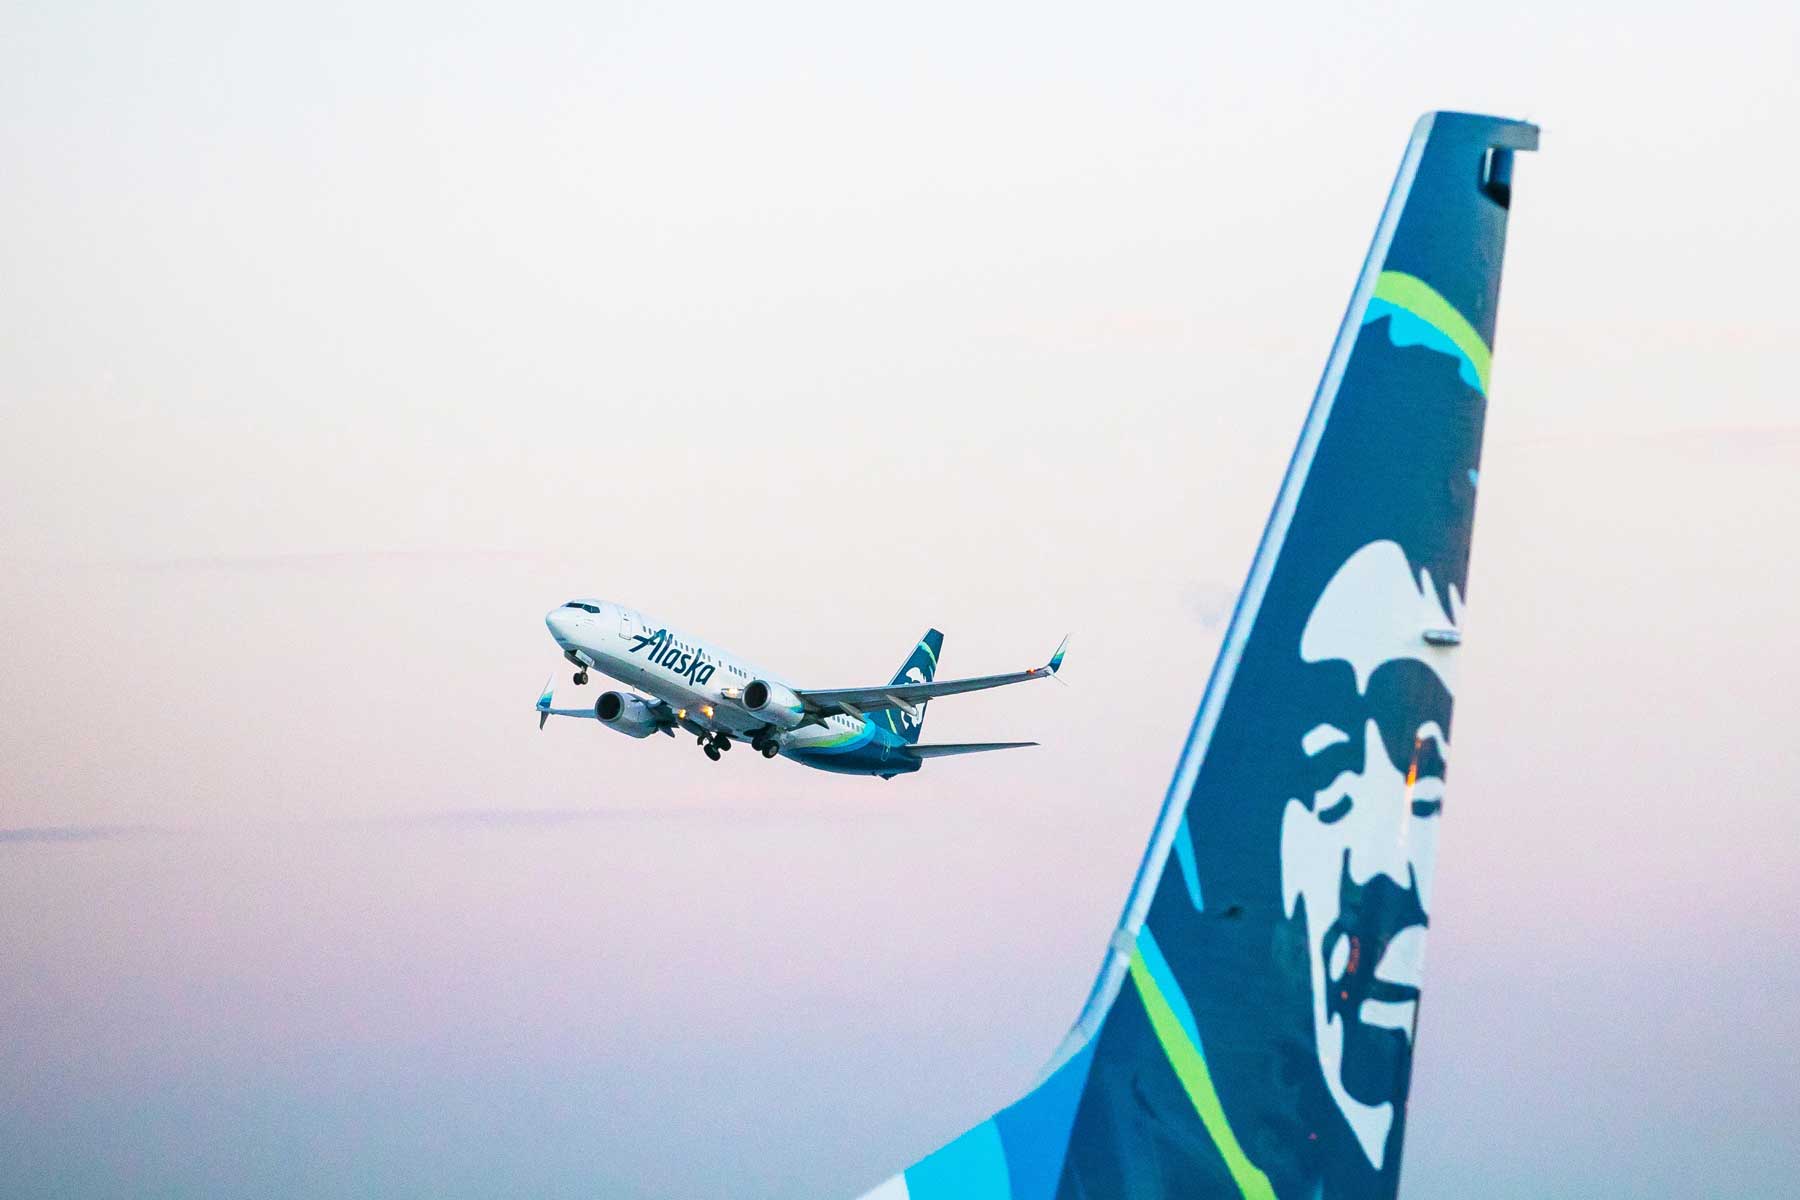 An Alaska Airlines plane takes flight